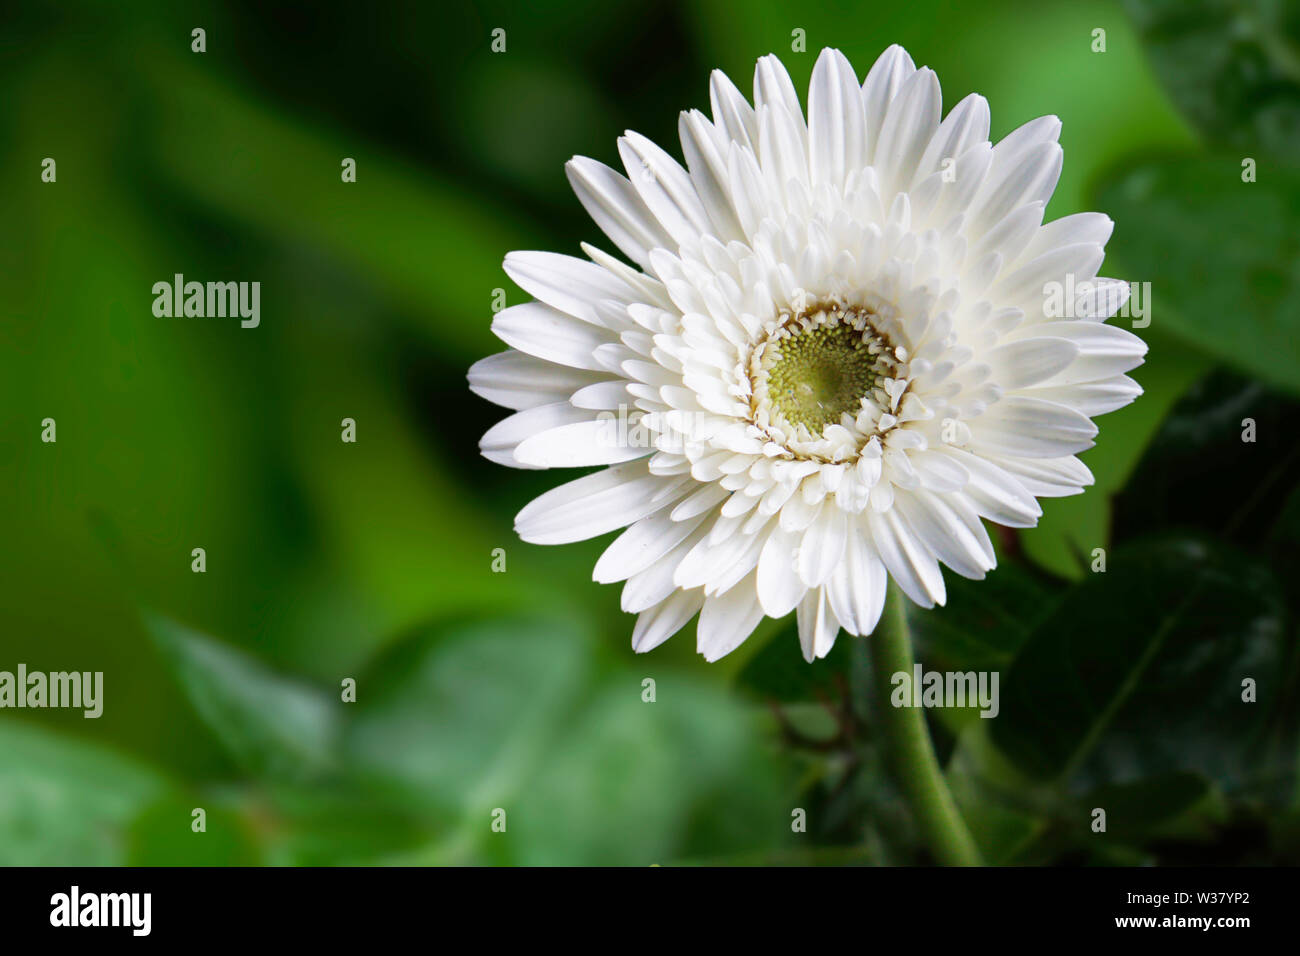 White Flower HD Image on Nursery garden Stock Photo